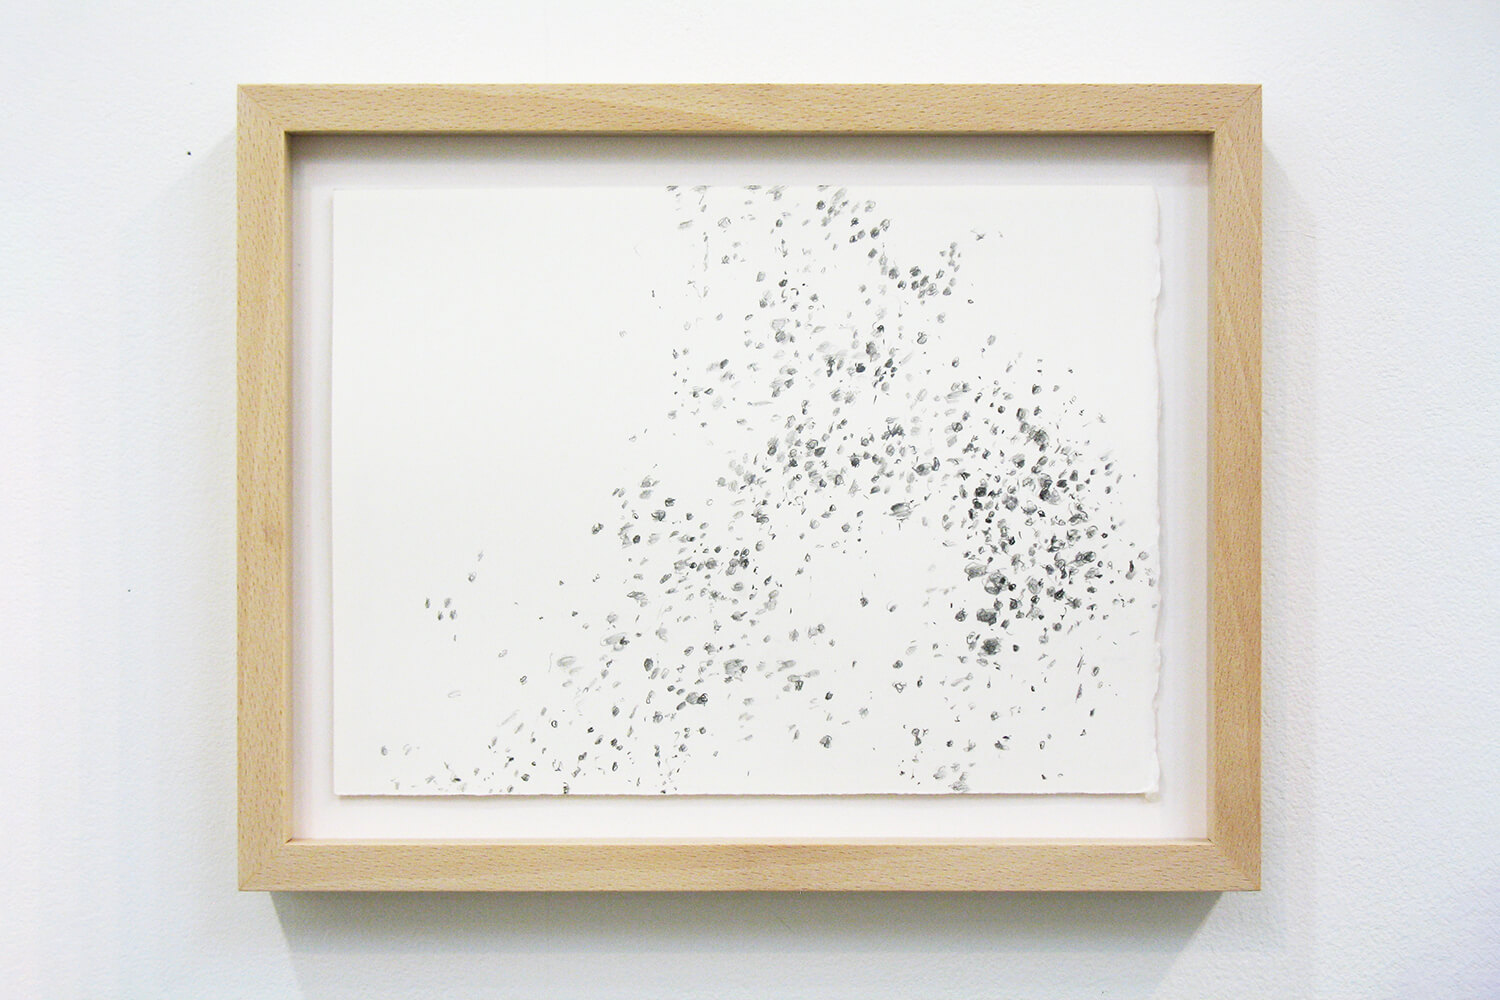 When the Dust Settles (d2)<br>Pencil on paper, 18.9 x 26 cm, 2010